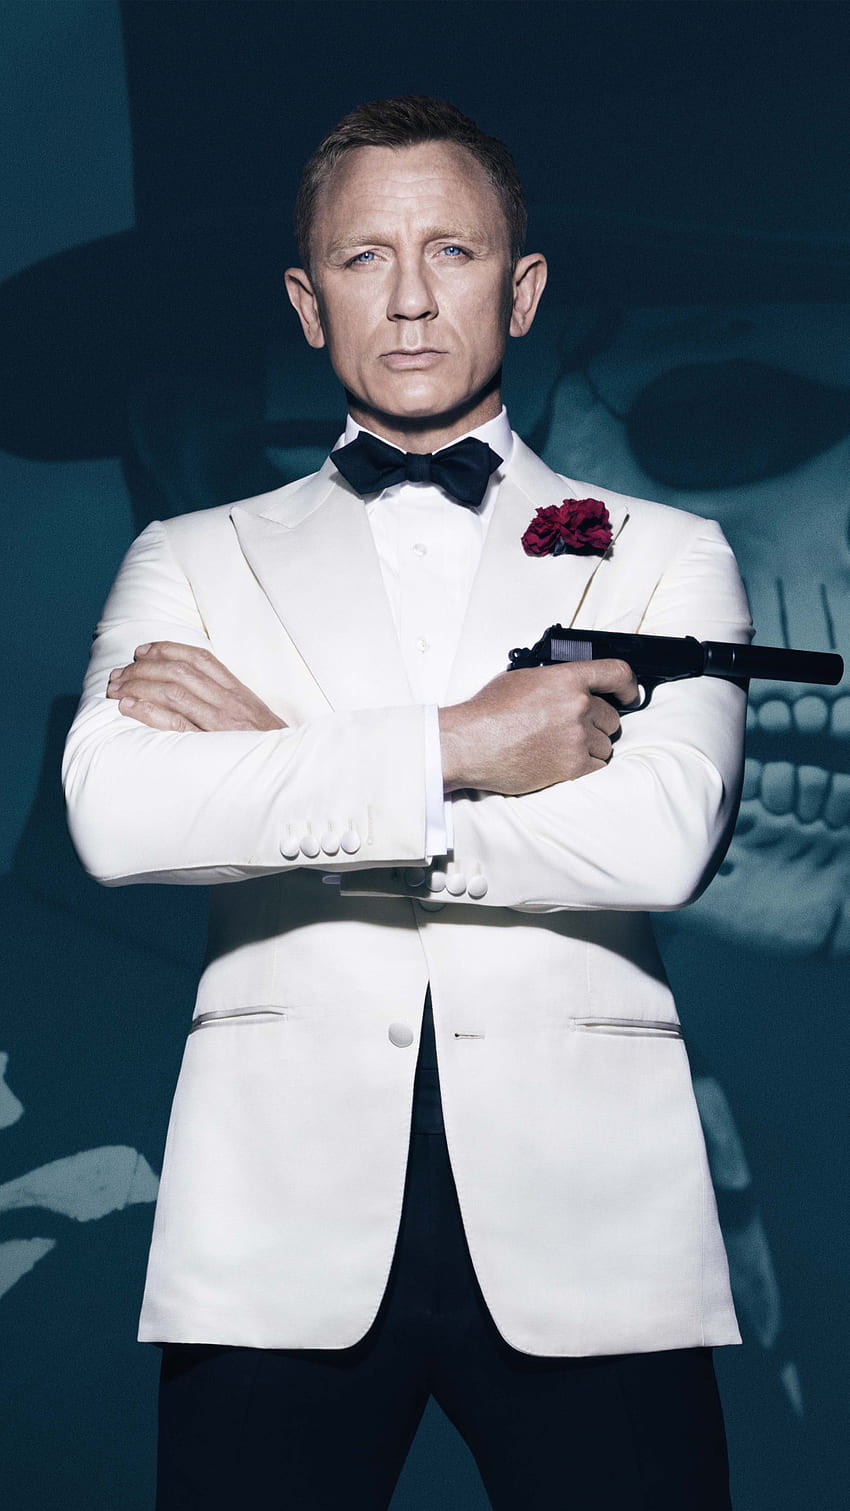 James Bond Spectre wallpapers